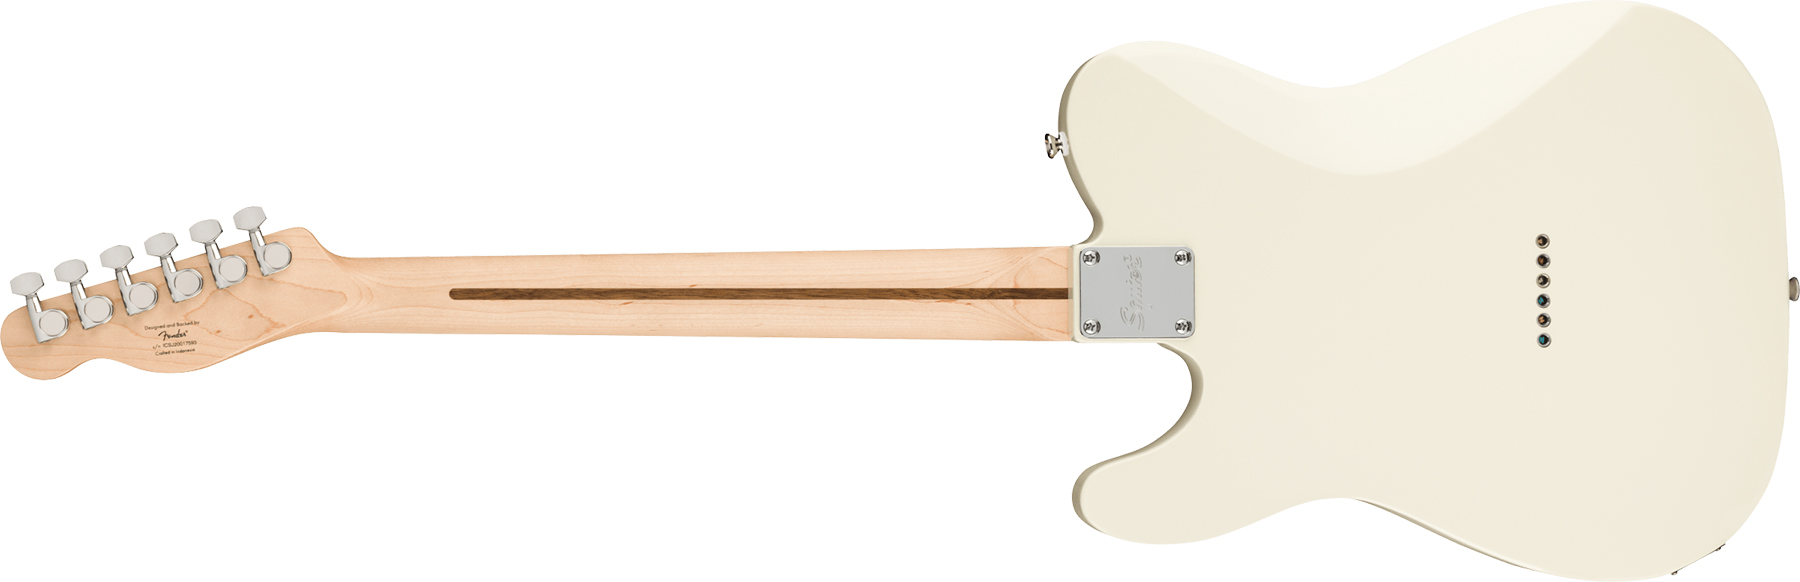 Squier Tele Affinity 2021 2s Lau - Olympic White - Televorm elektrische gitaar - Variation 1